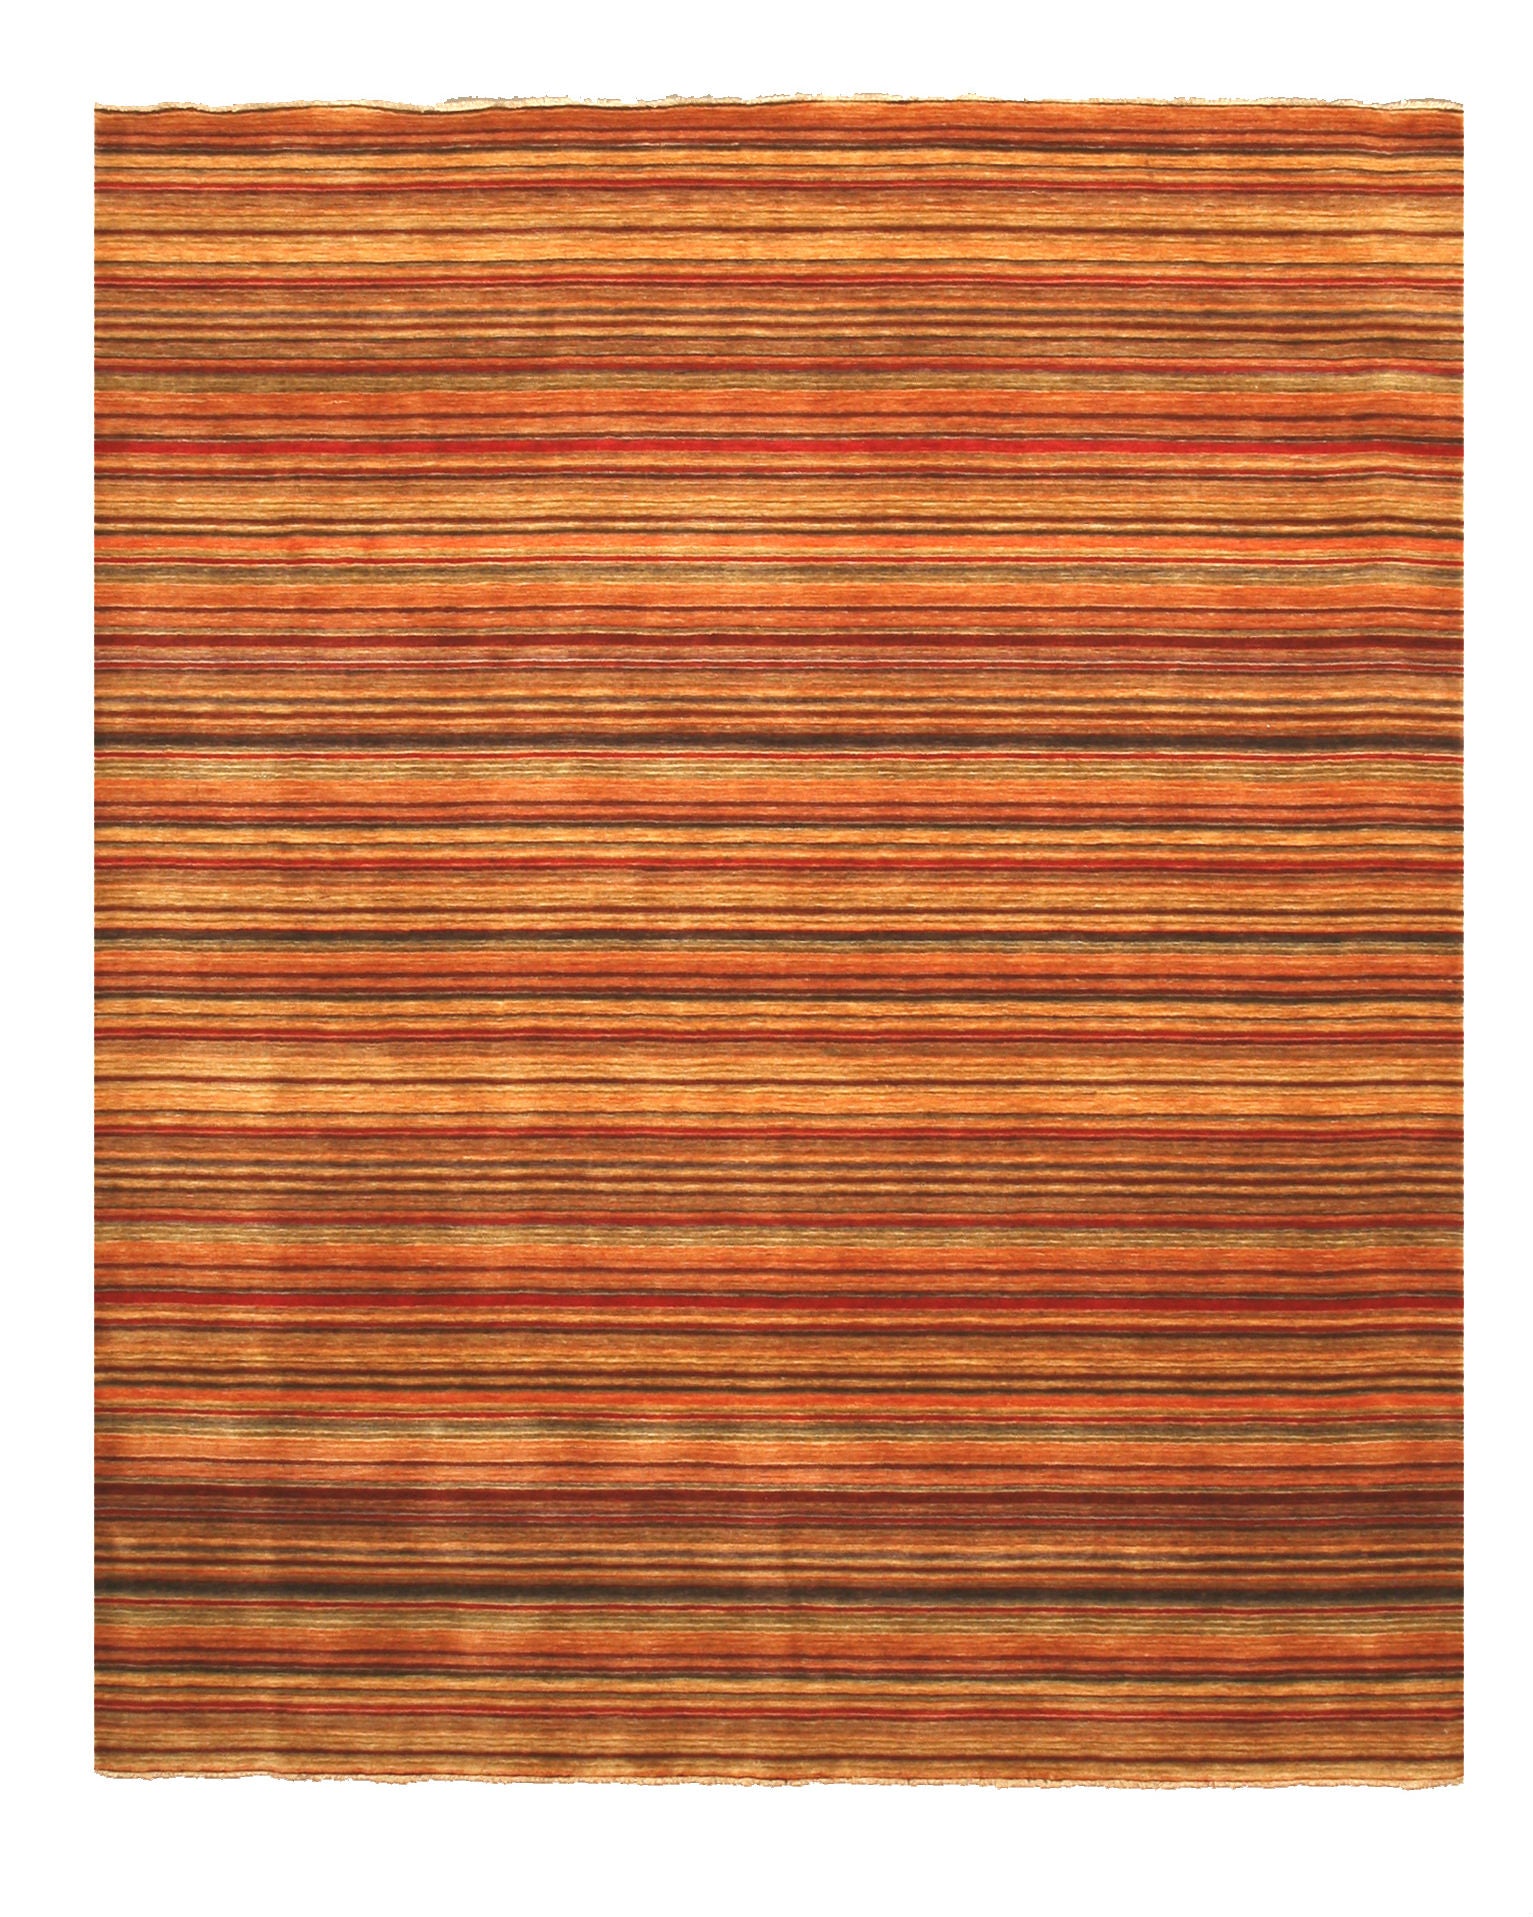 EORC Handmade Wool Multicolored Transitional Stripe Lori Toni Rug